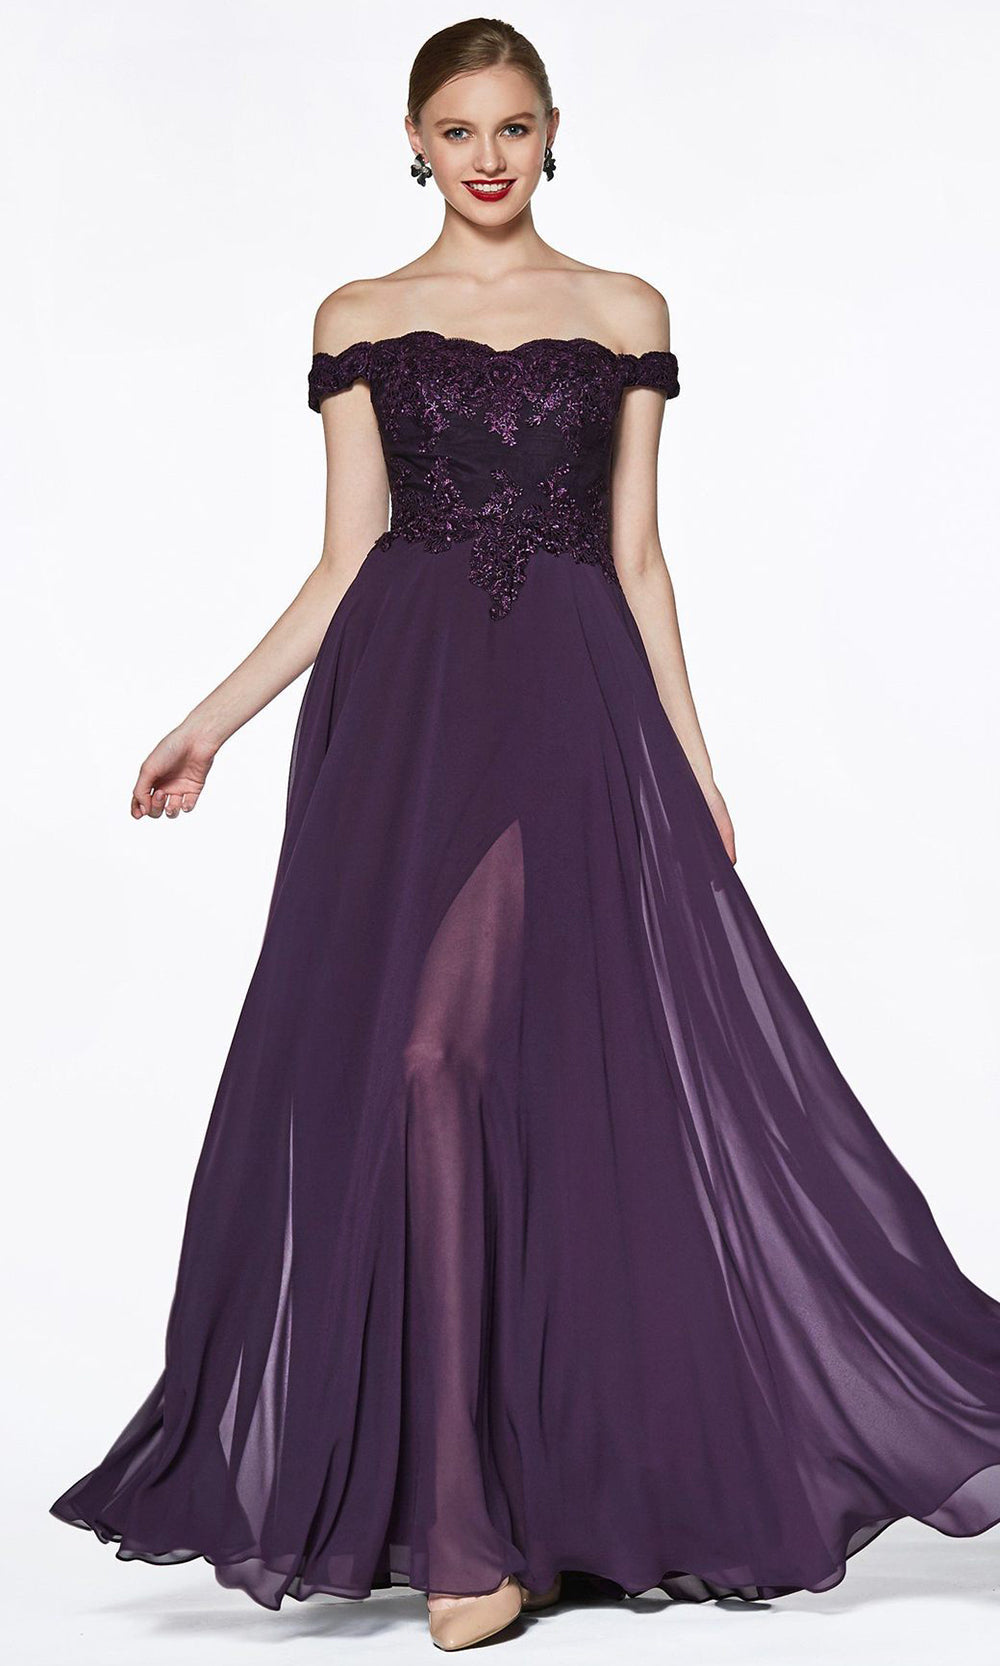 Ladivine - 7258 Scallop Chiffon A-Line Gown In Purple and Black